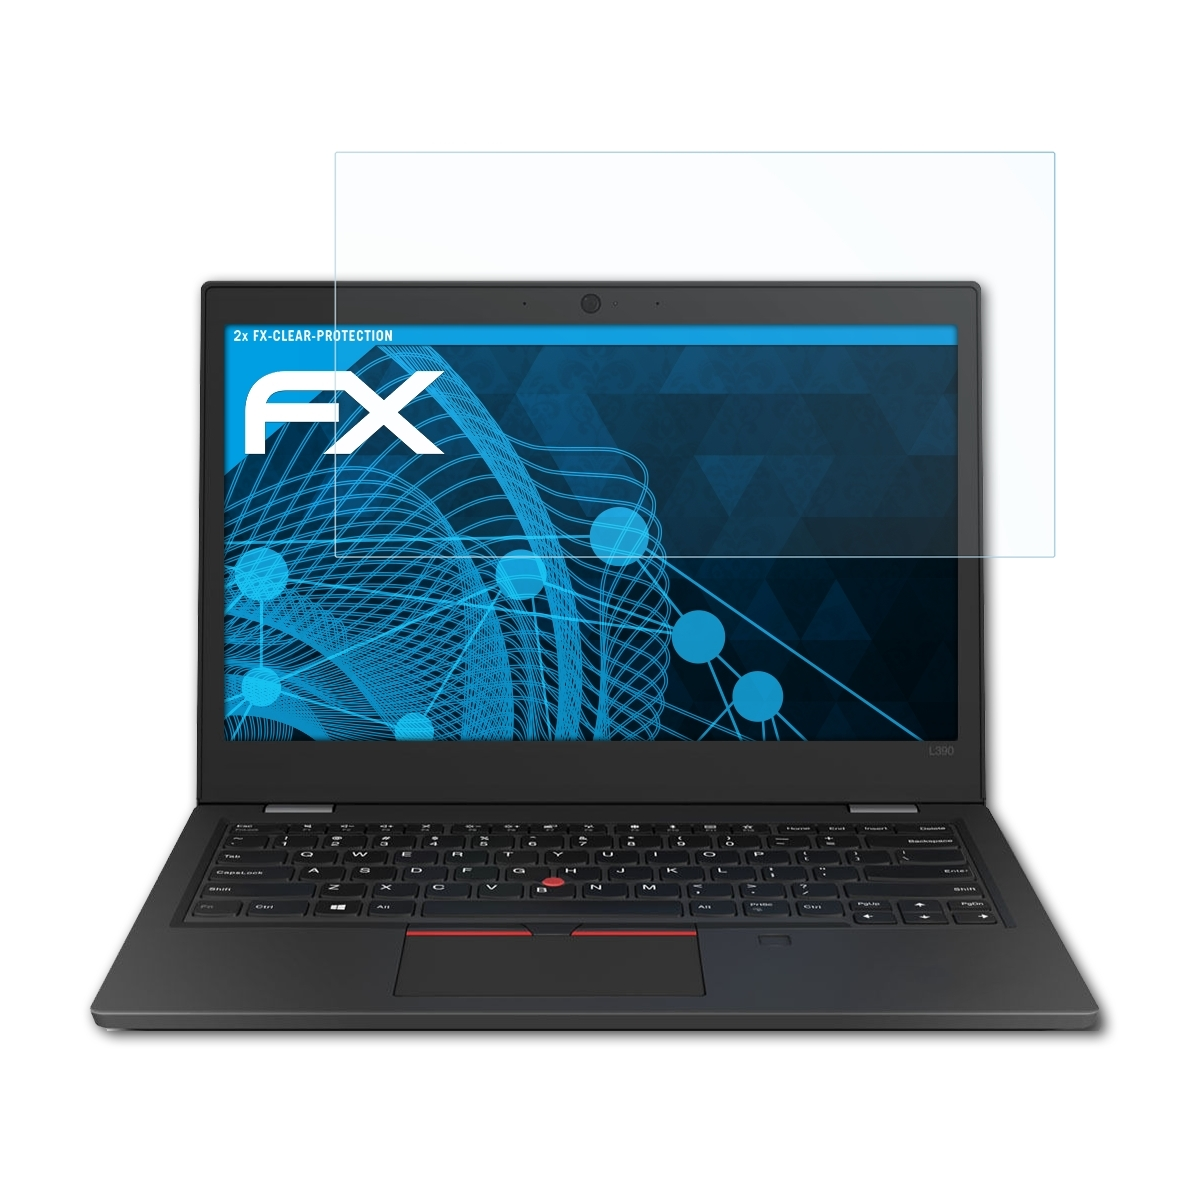 FX-Clear Lenovo ThinkPad L390) ATFOLIX 2x Displayschutz(für